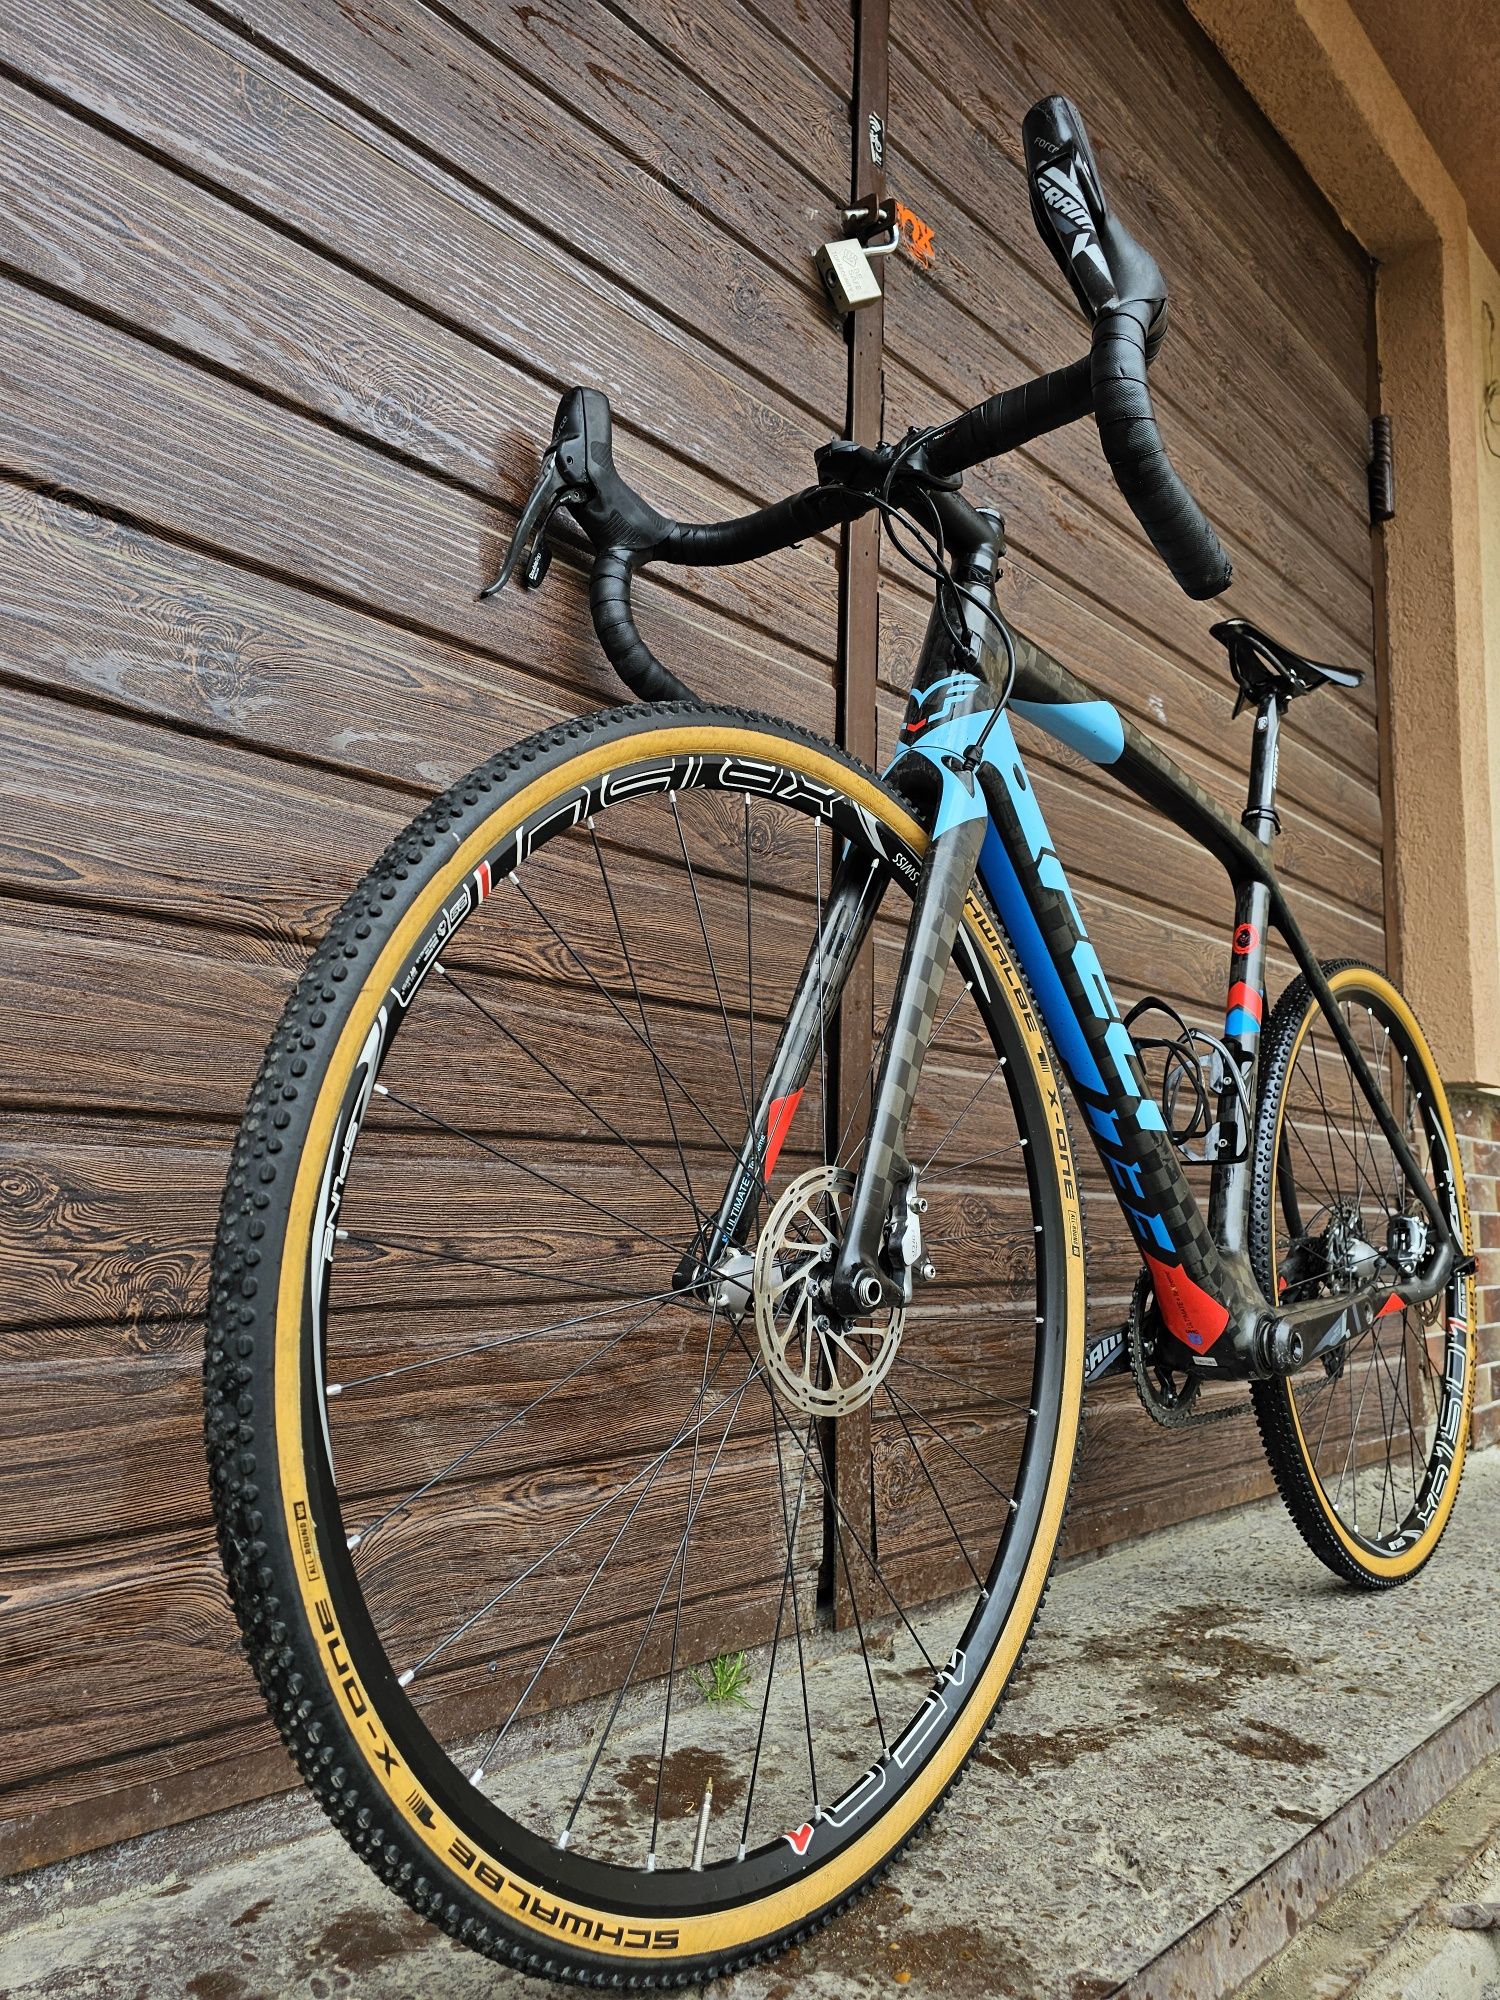 Felt FX FRD cyclocross